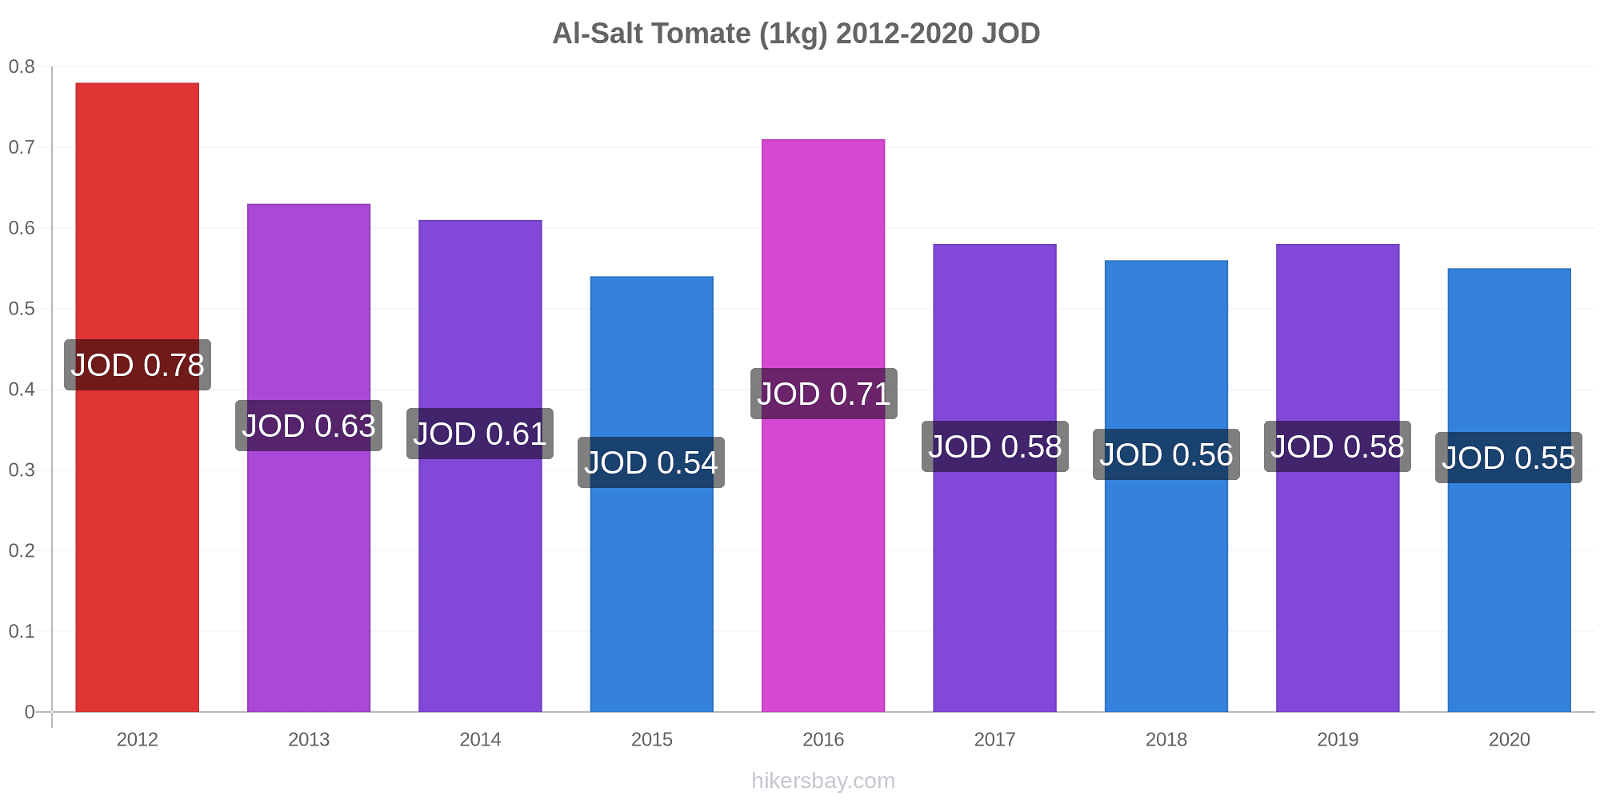 Al-Salt Preisänderungen Tomaten (1kg) hikersbay.com